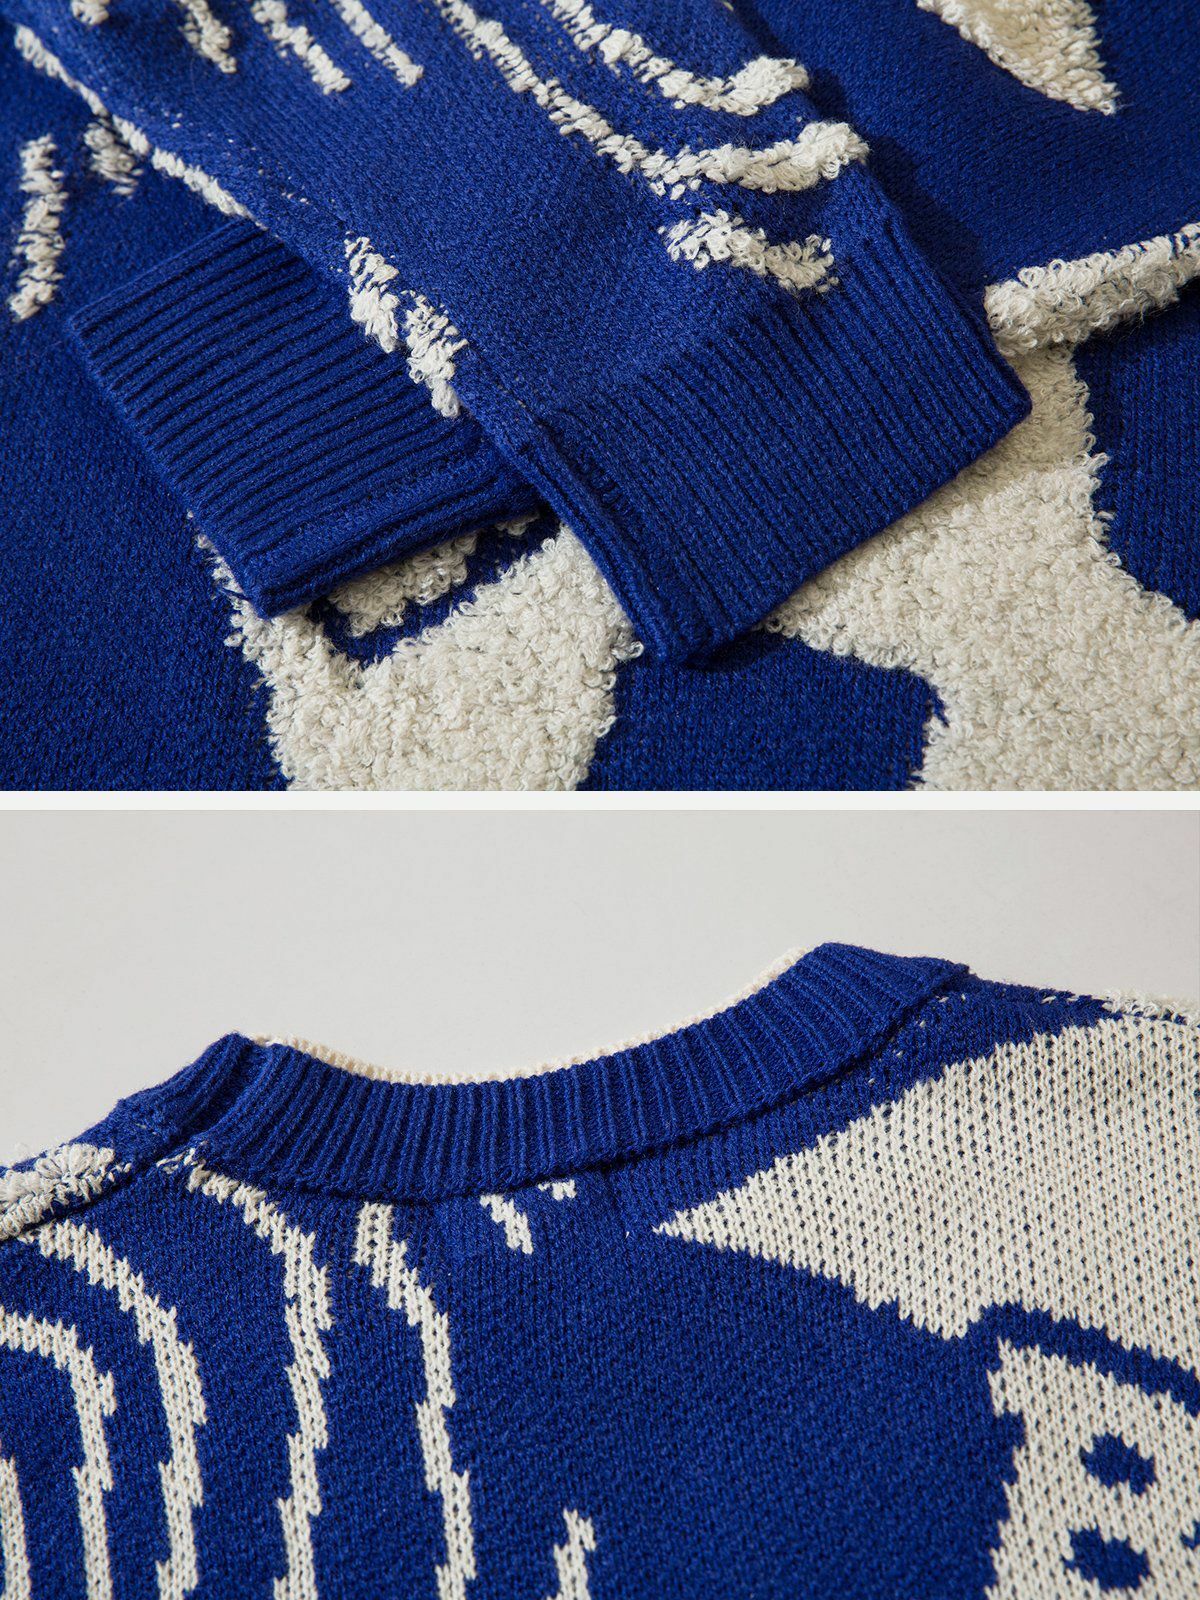 flocked patchwork sweater edgy streetwear statement 5071